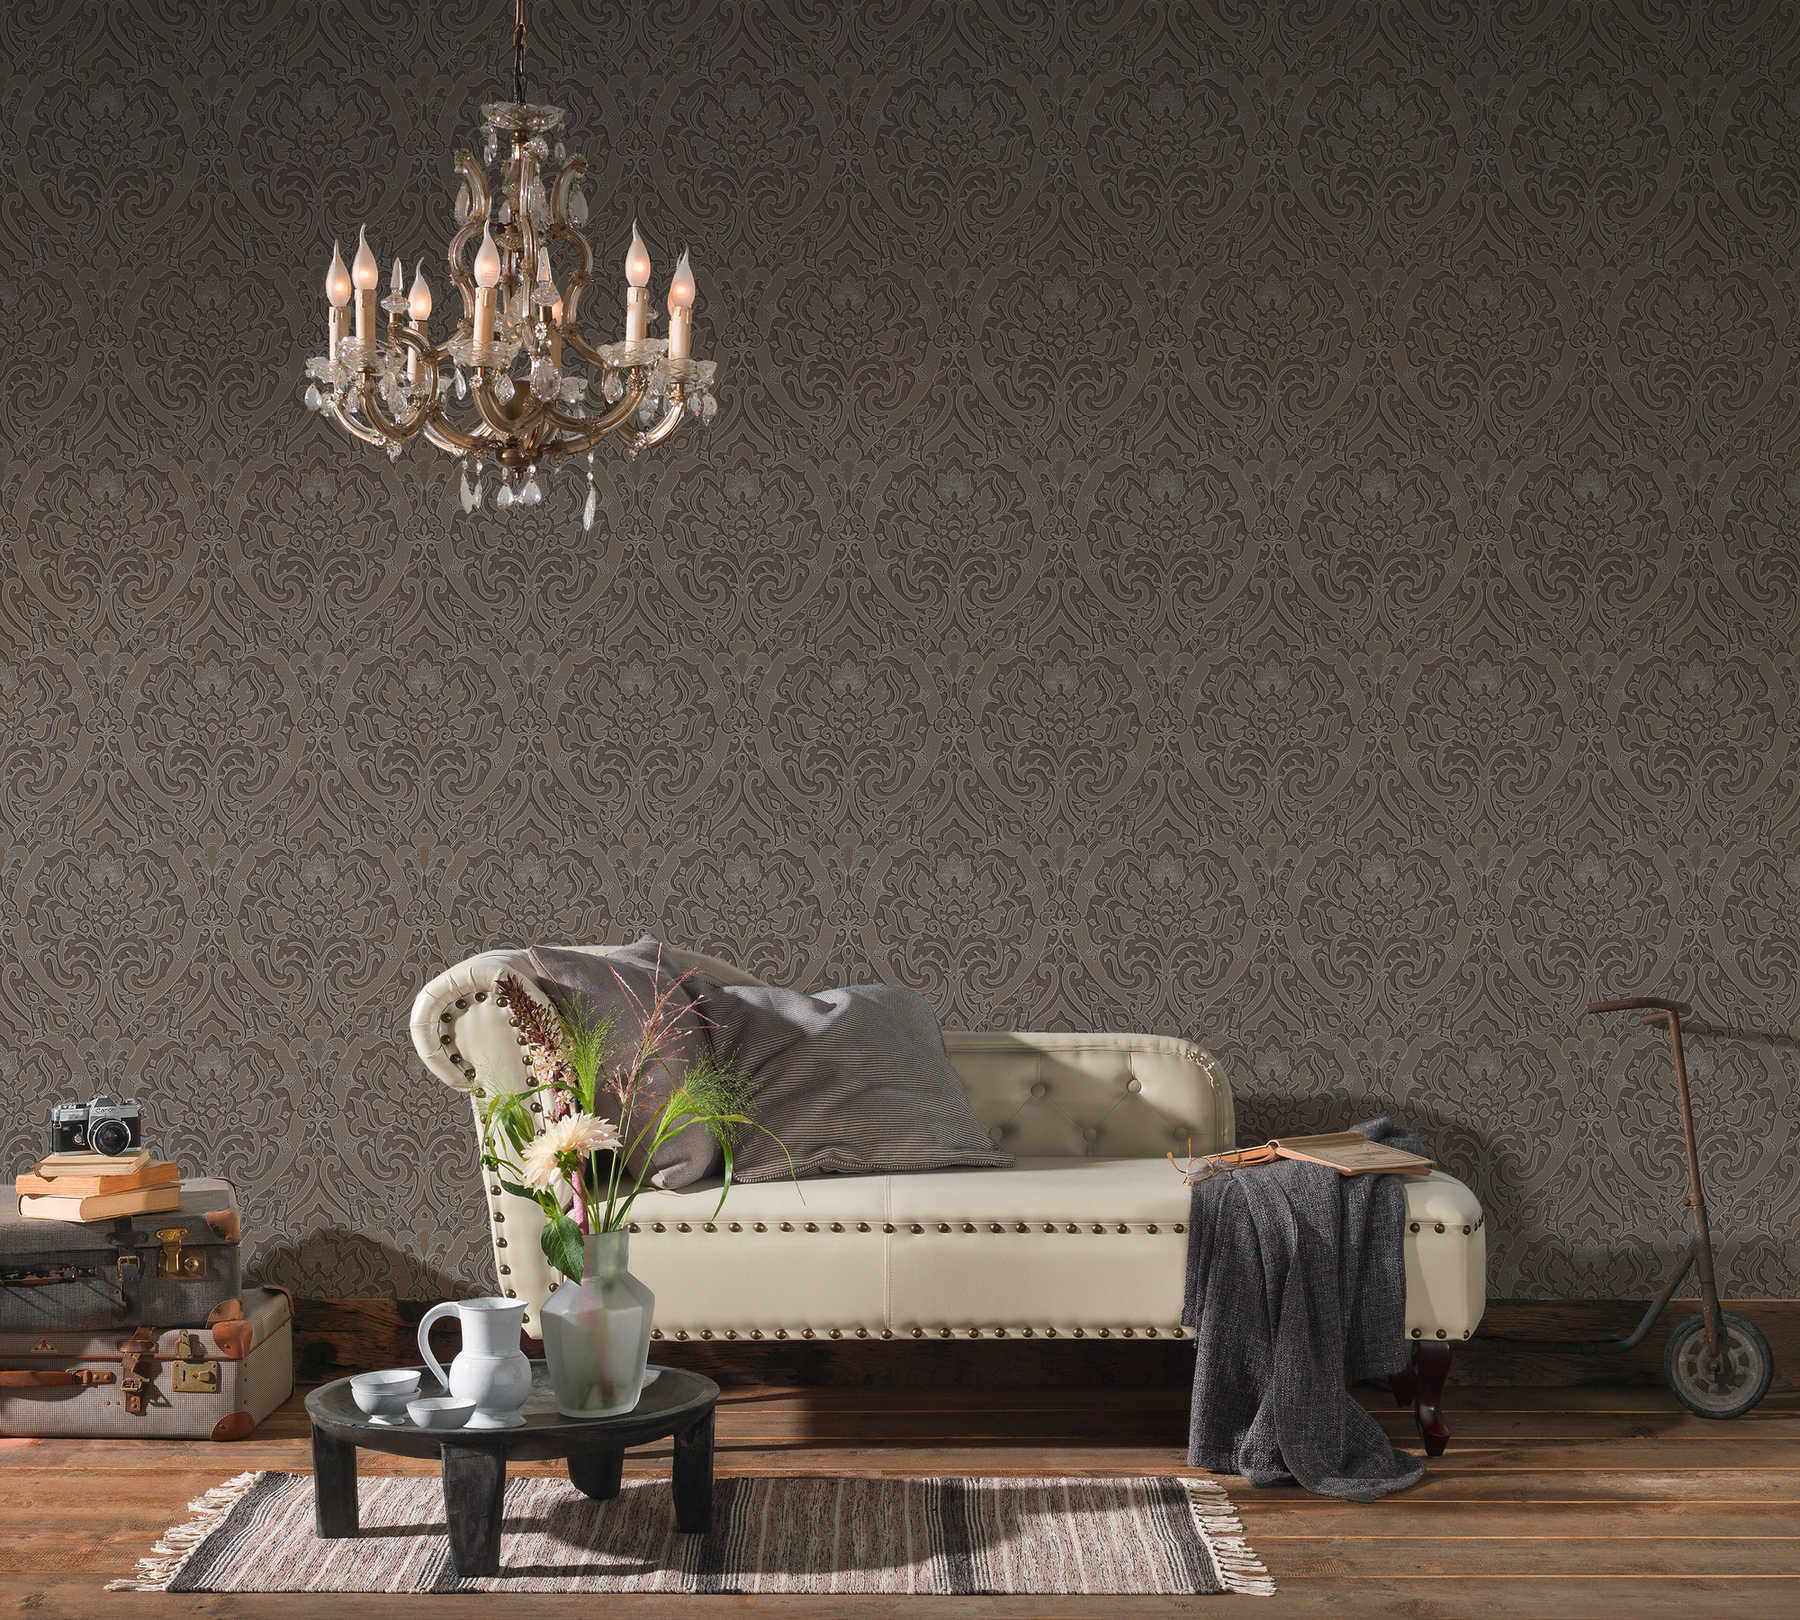             Ornament wallpaper with 3D design & texture pattern - Brown, Metallic
        